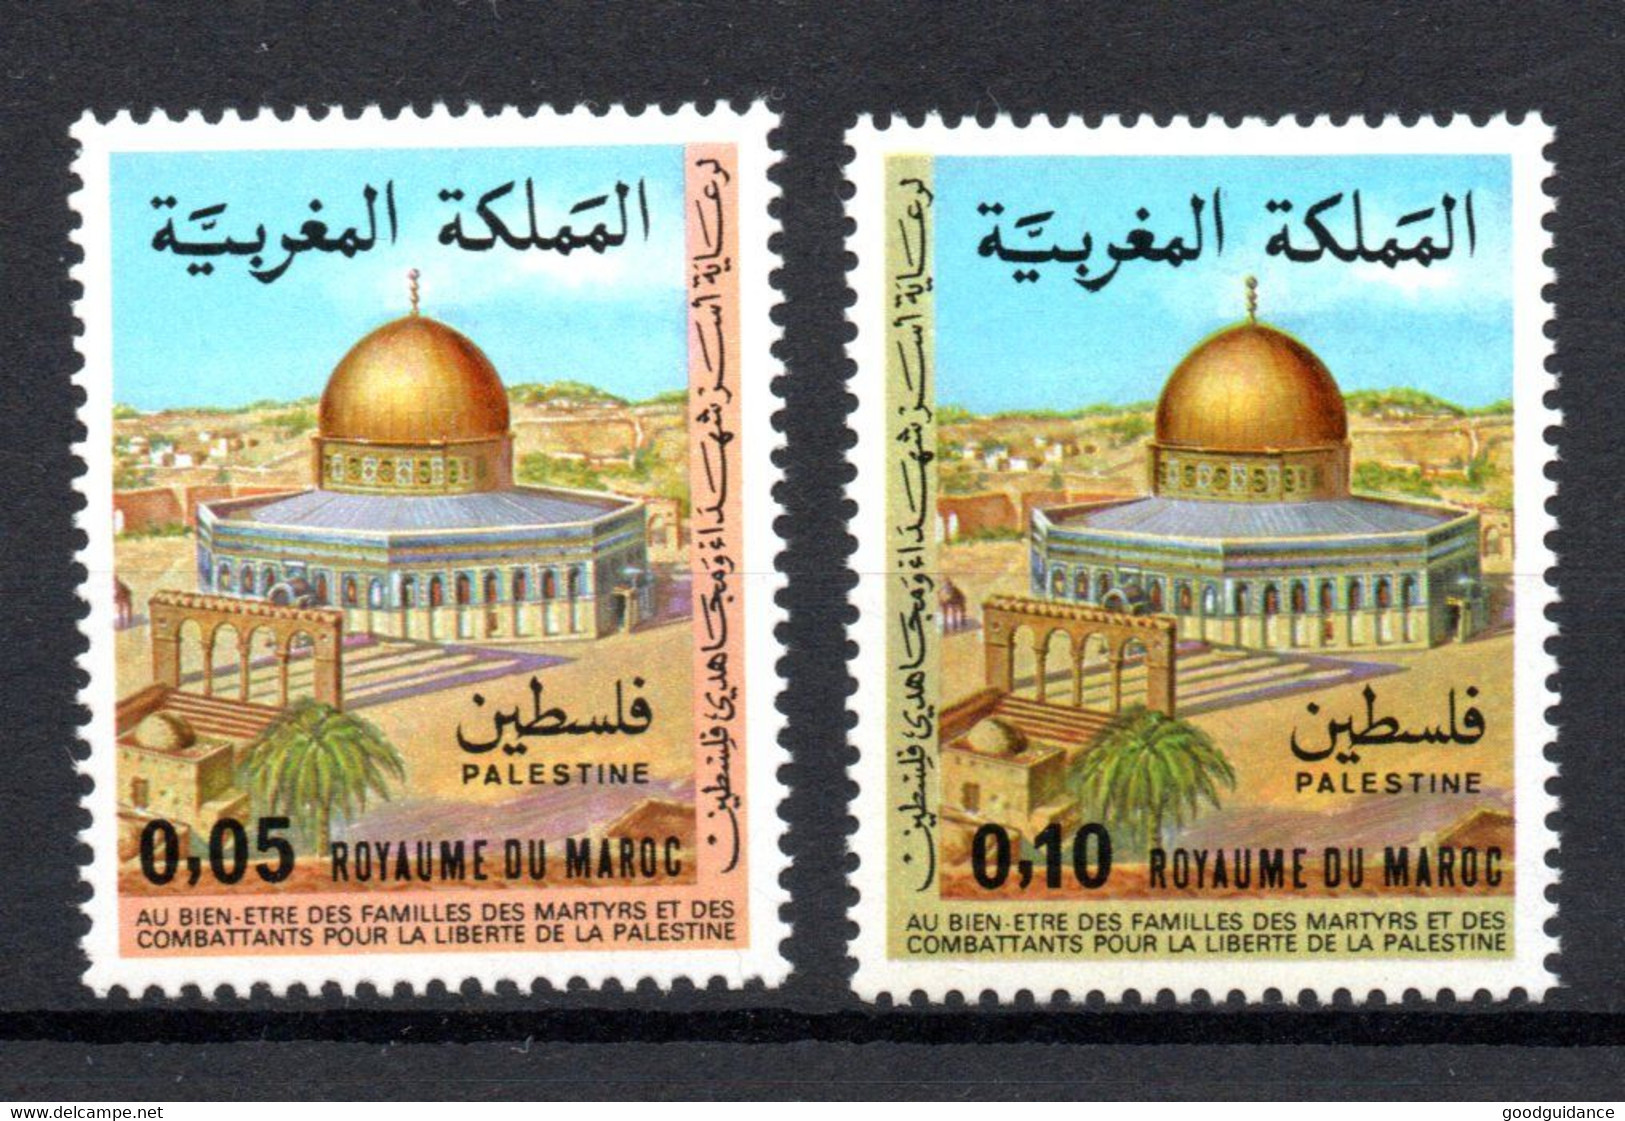 1978 - Morocco- Maroc- Palestinian  Solidarity- Soutien Aux Palestiniens- Dome- Jerusalem- El Quds-  Set 2v.MNH** - Mosquées & Synagogues